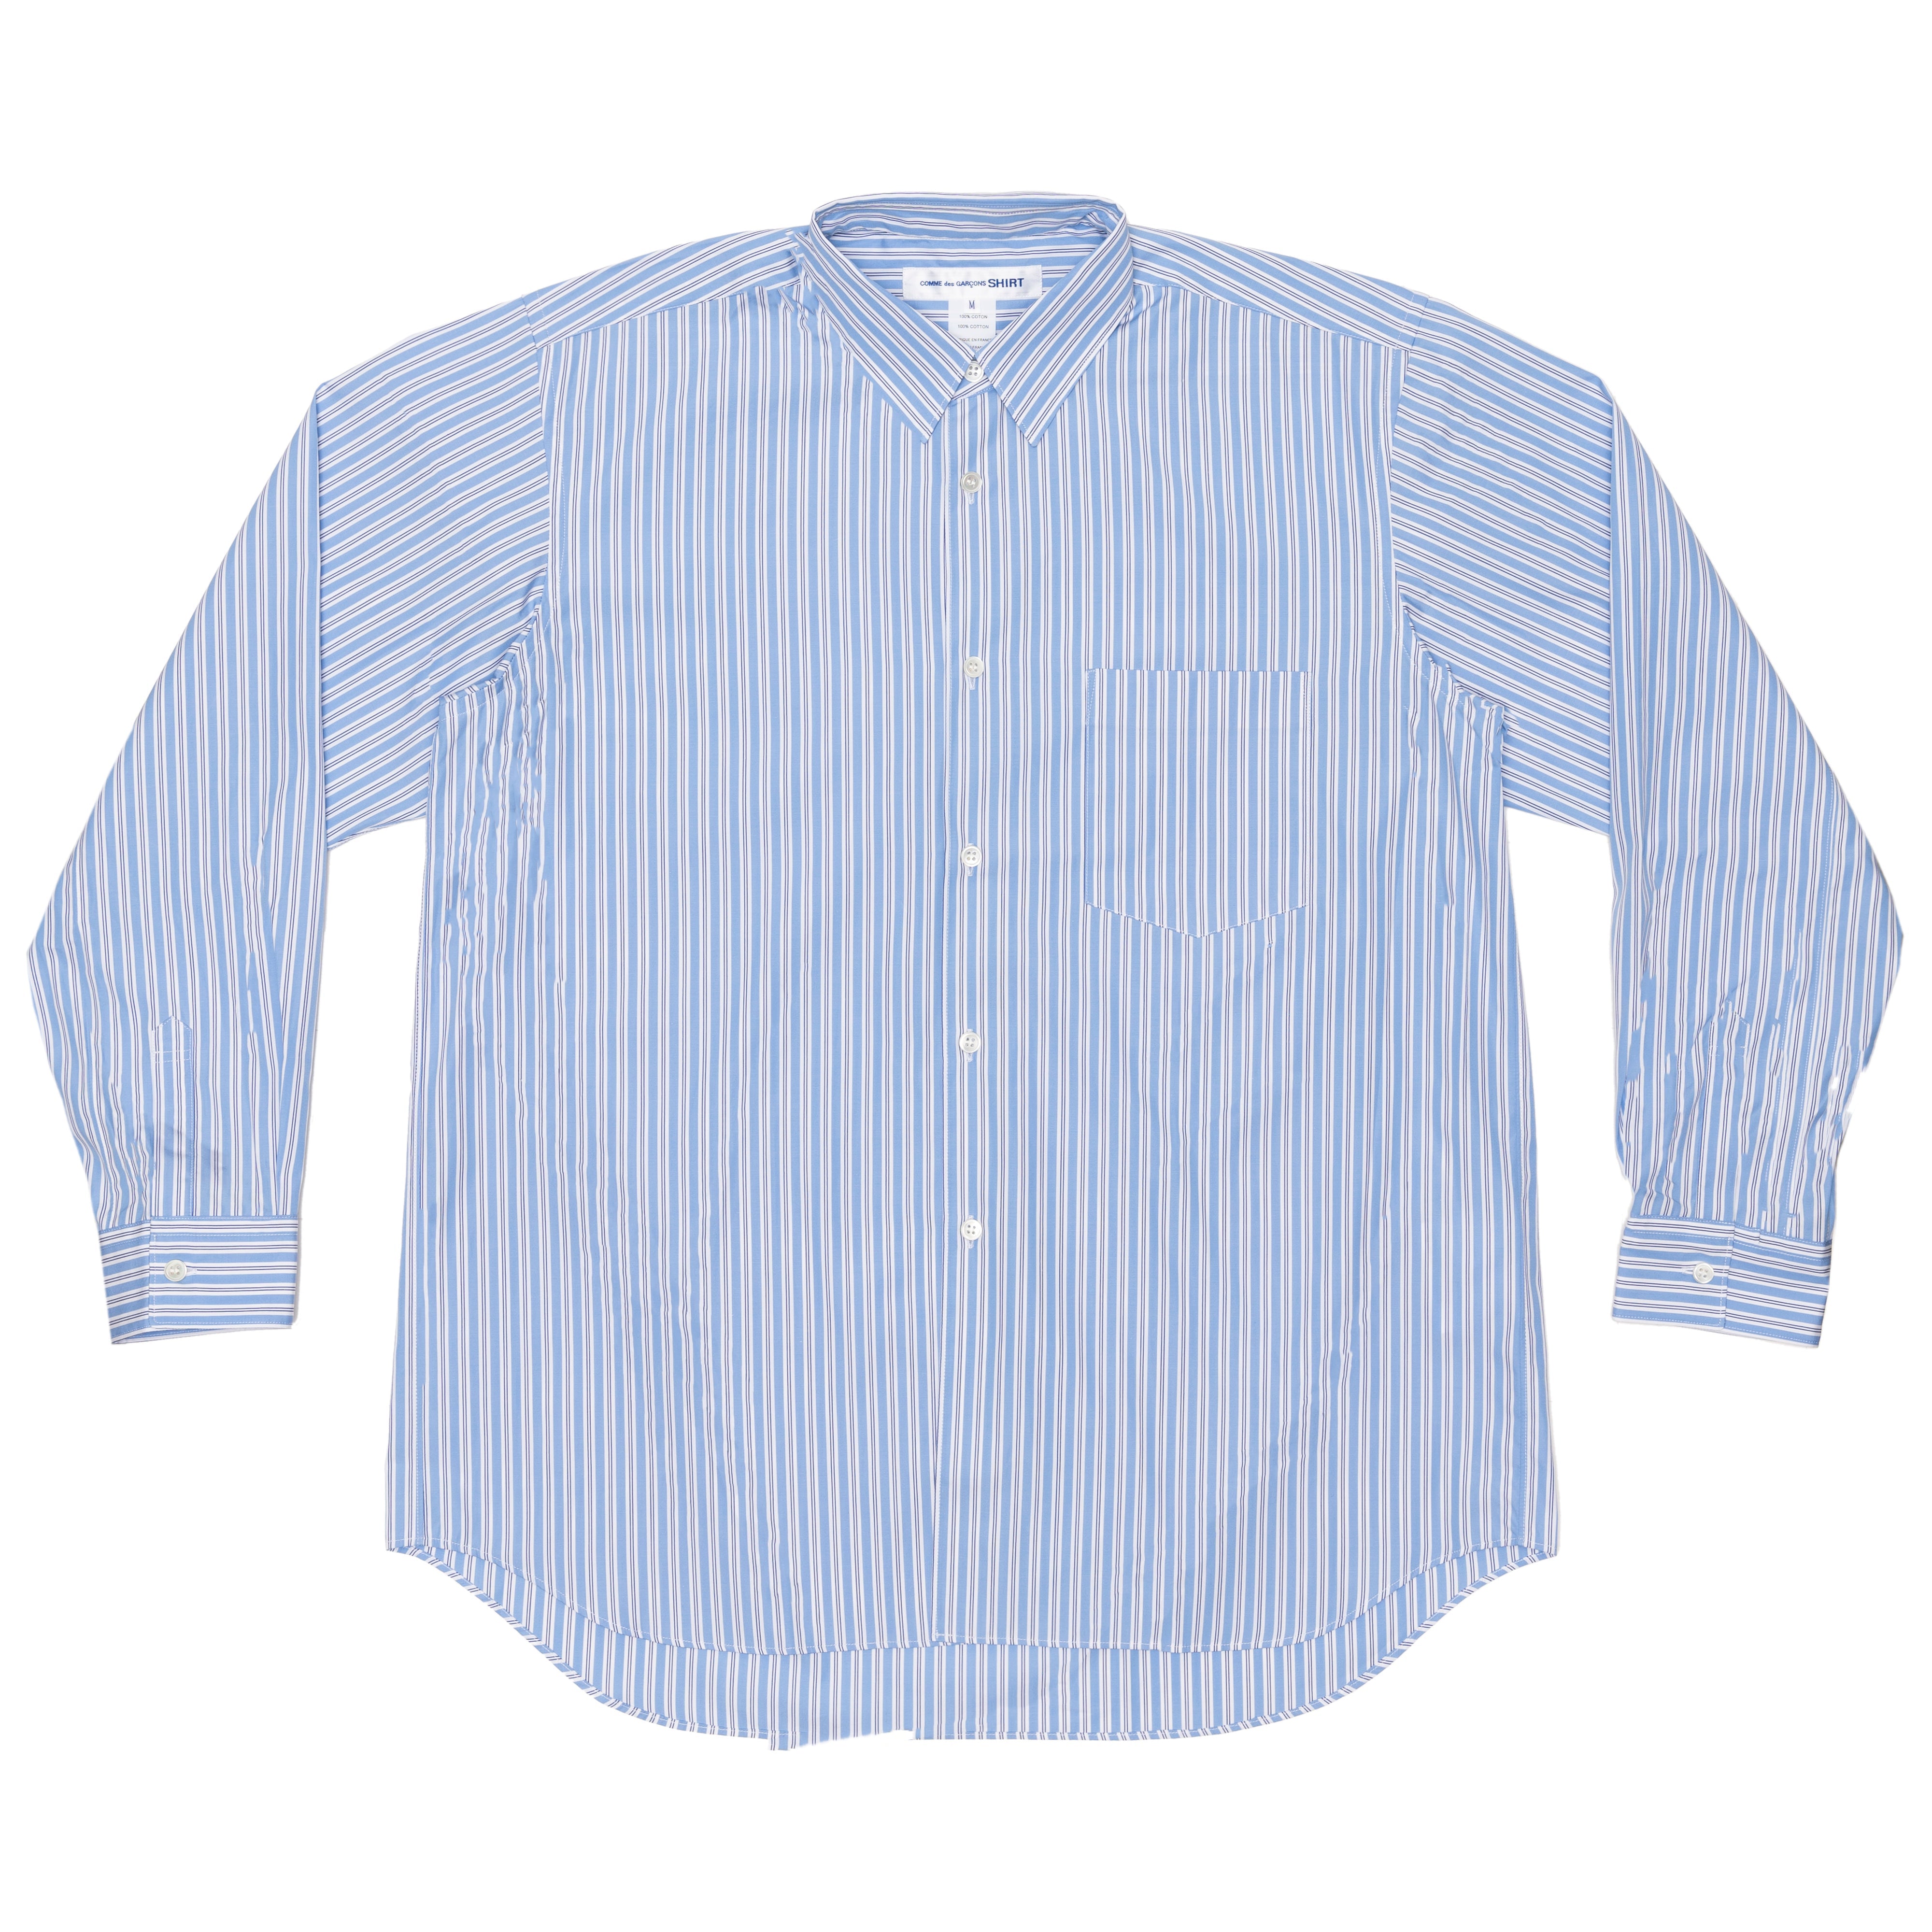 CDG SHIRT FOREVER - Wide Classic Yarn Dyed Cotton Poplin Shirt 